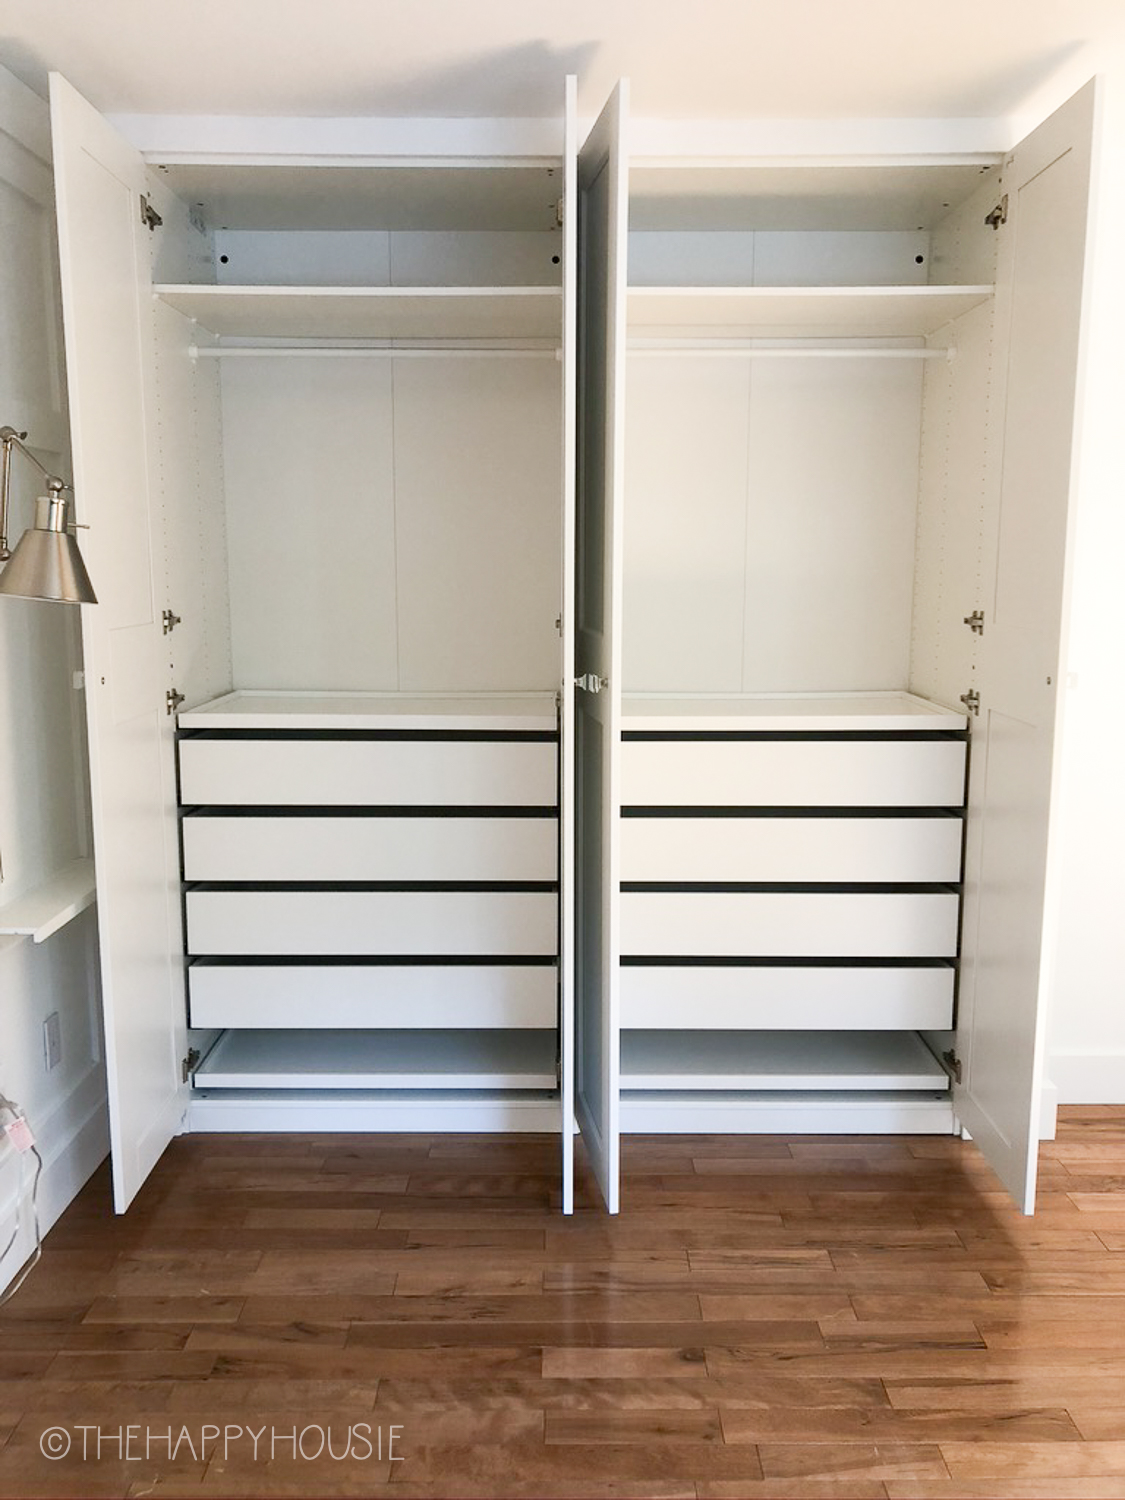 IKEA Closet: Our Pax Entry and Coat Closet